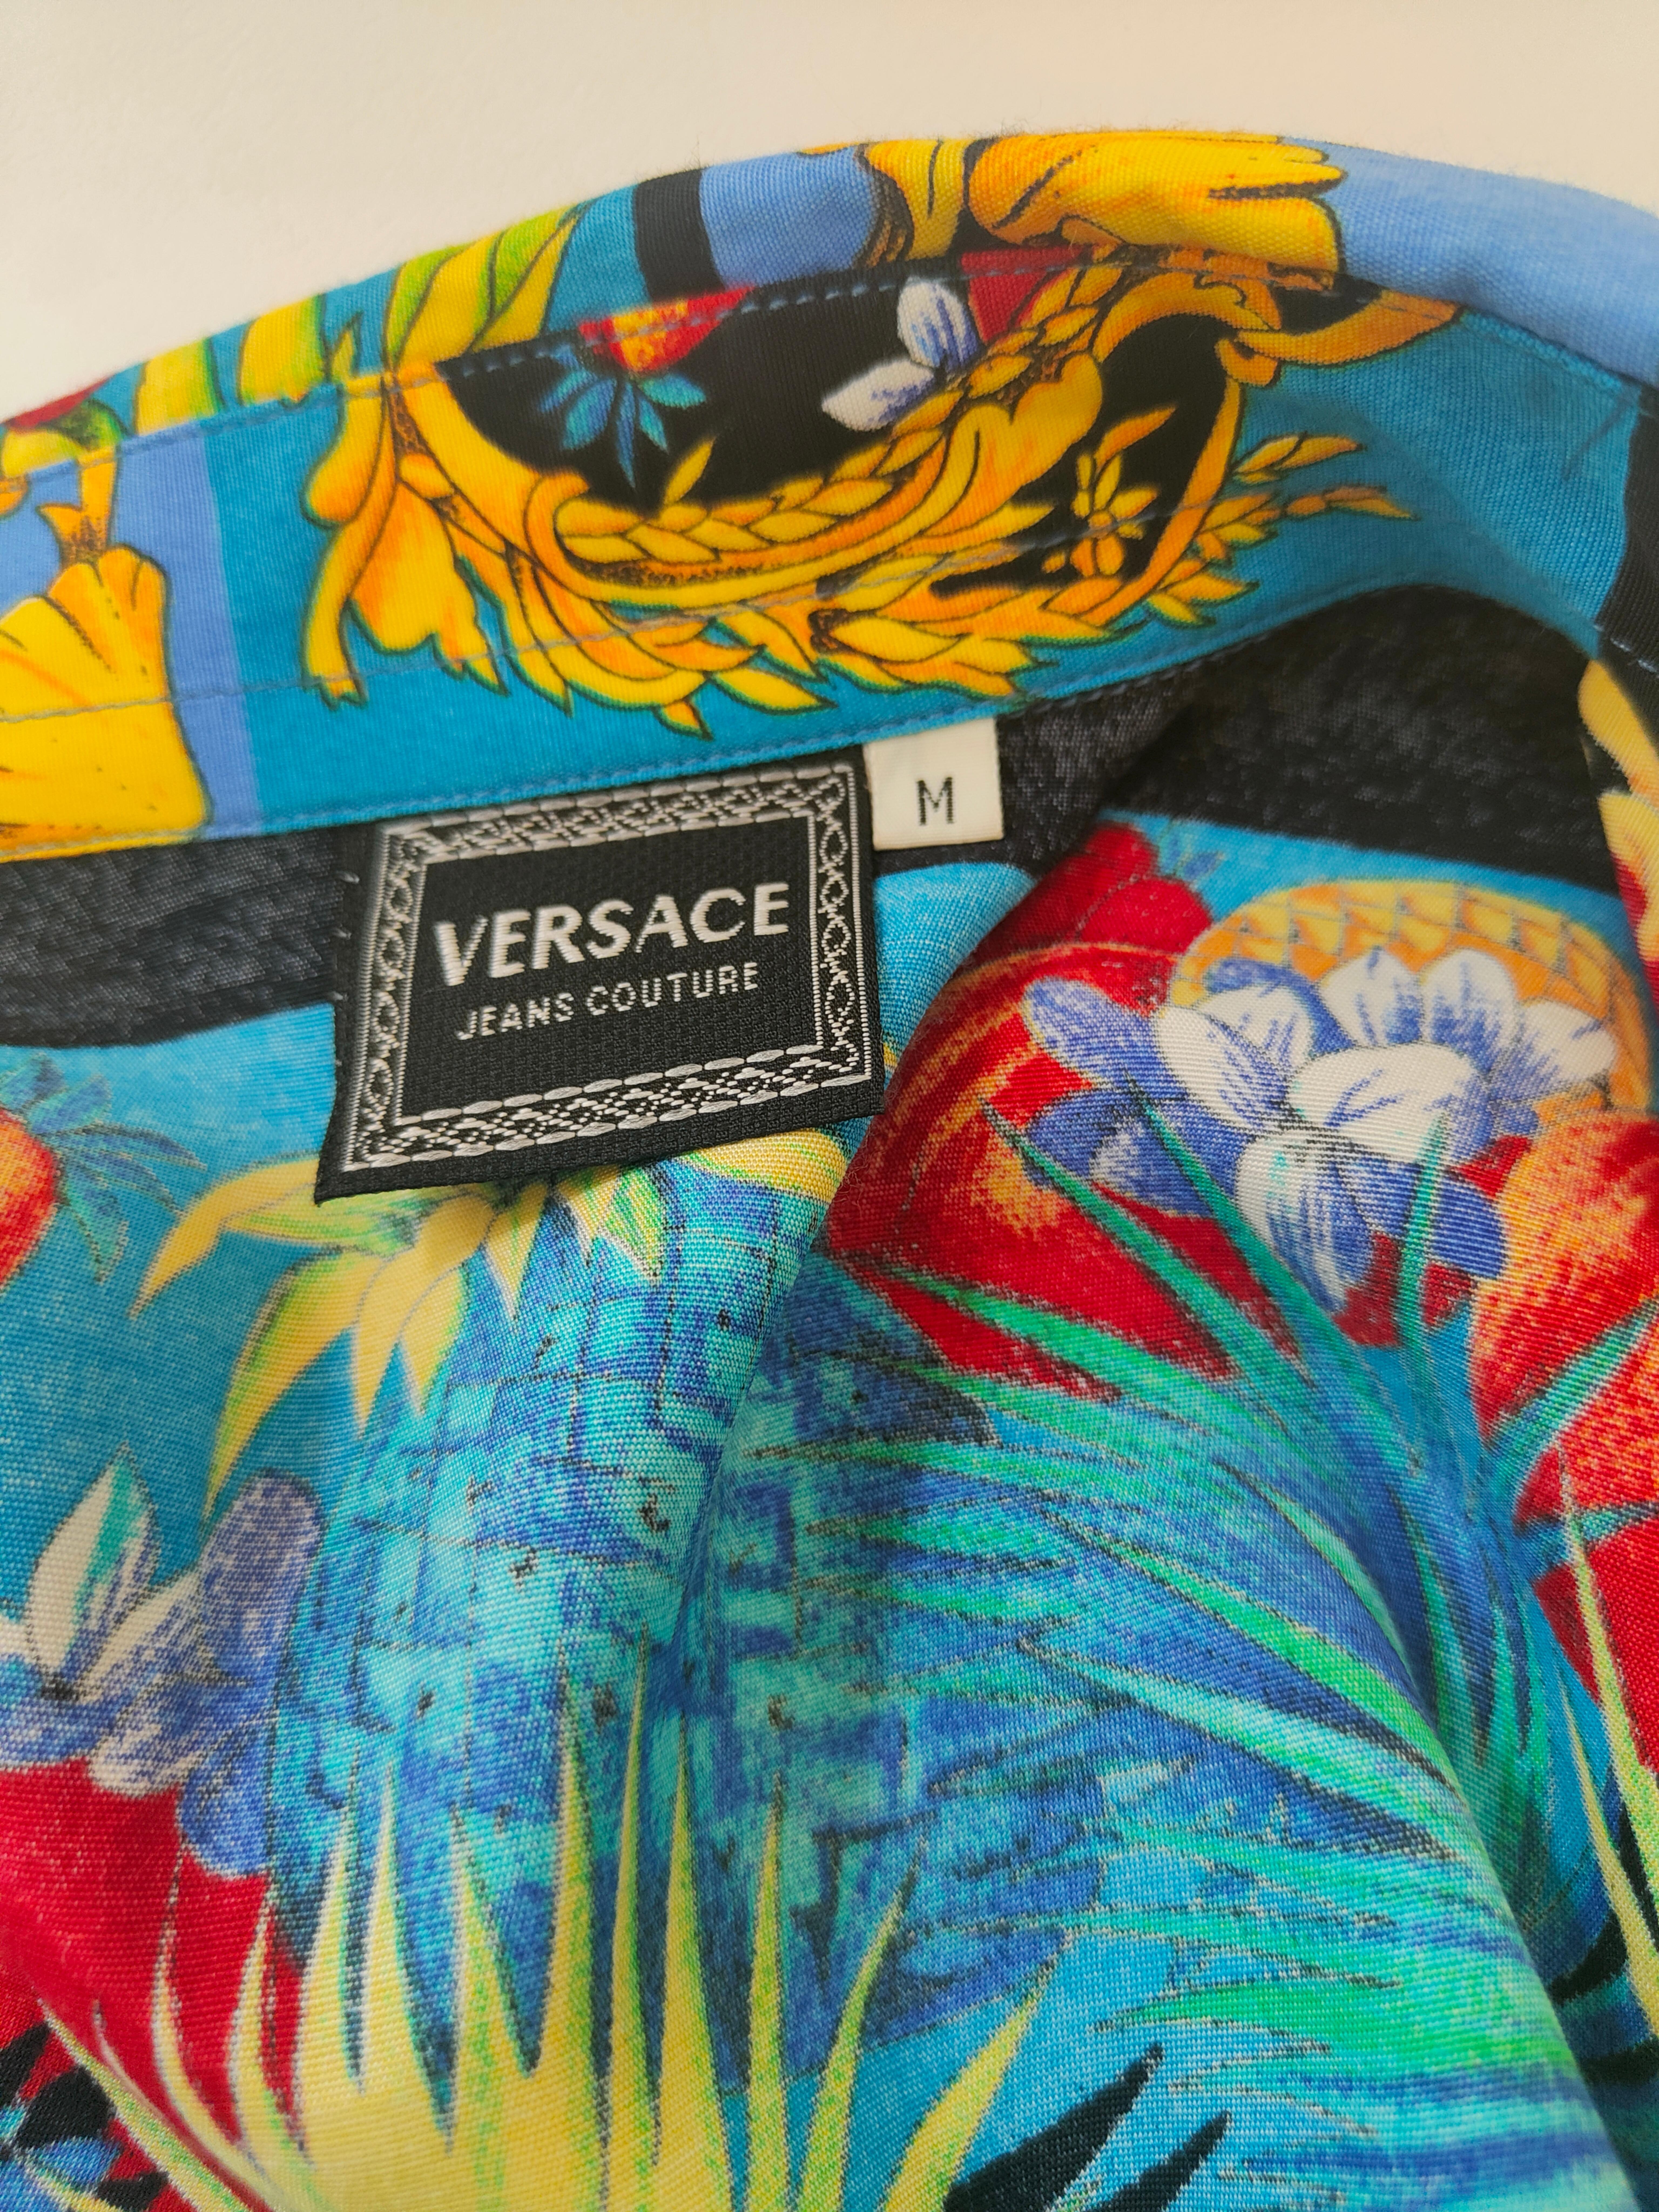 Versace iconic multicoloured cotton shirt
Size M